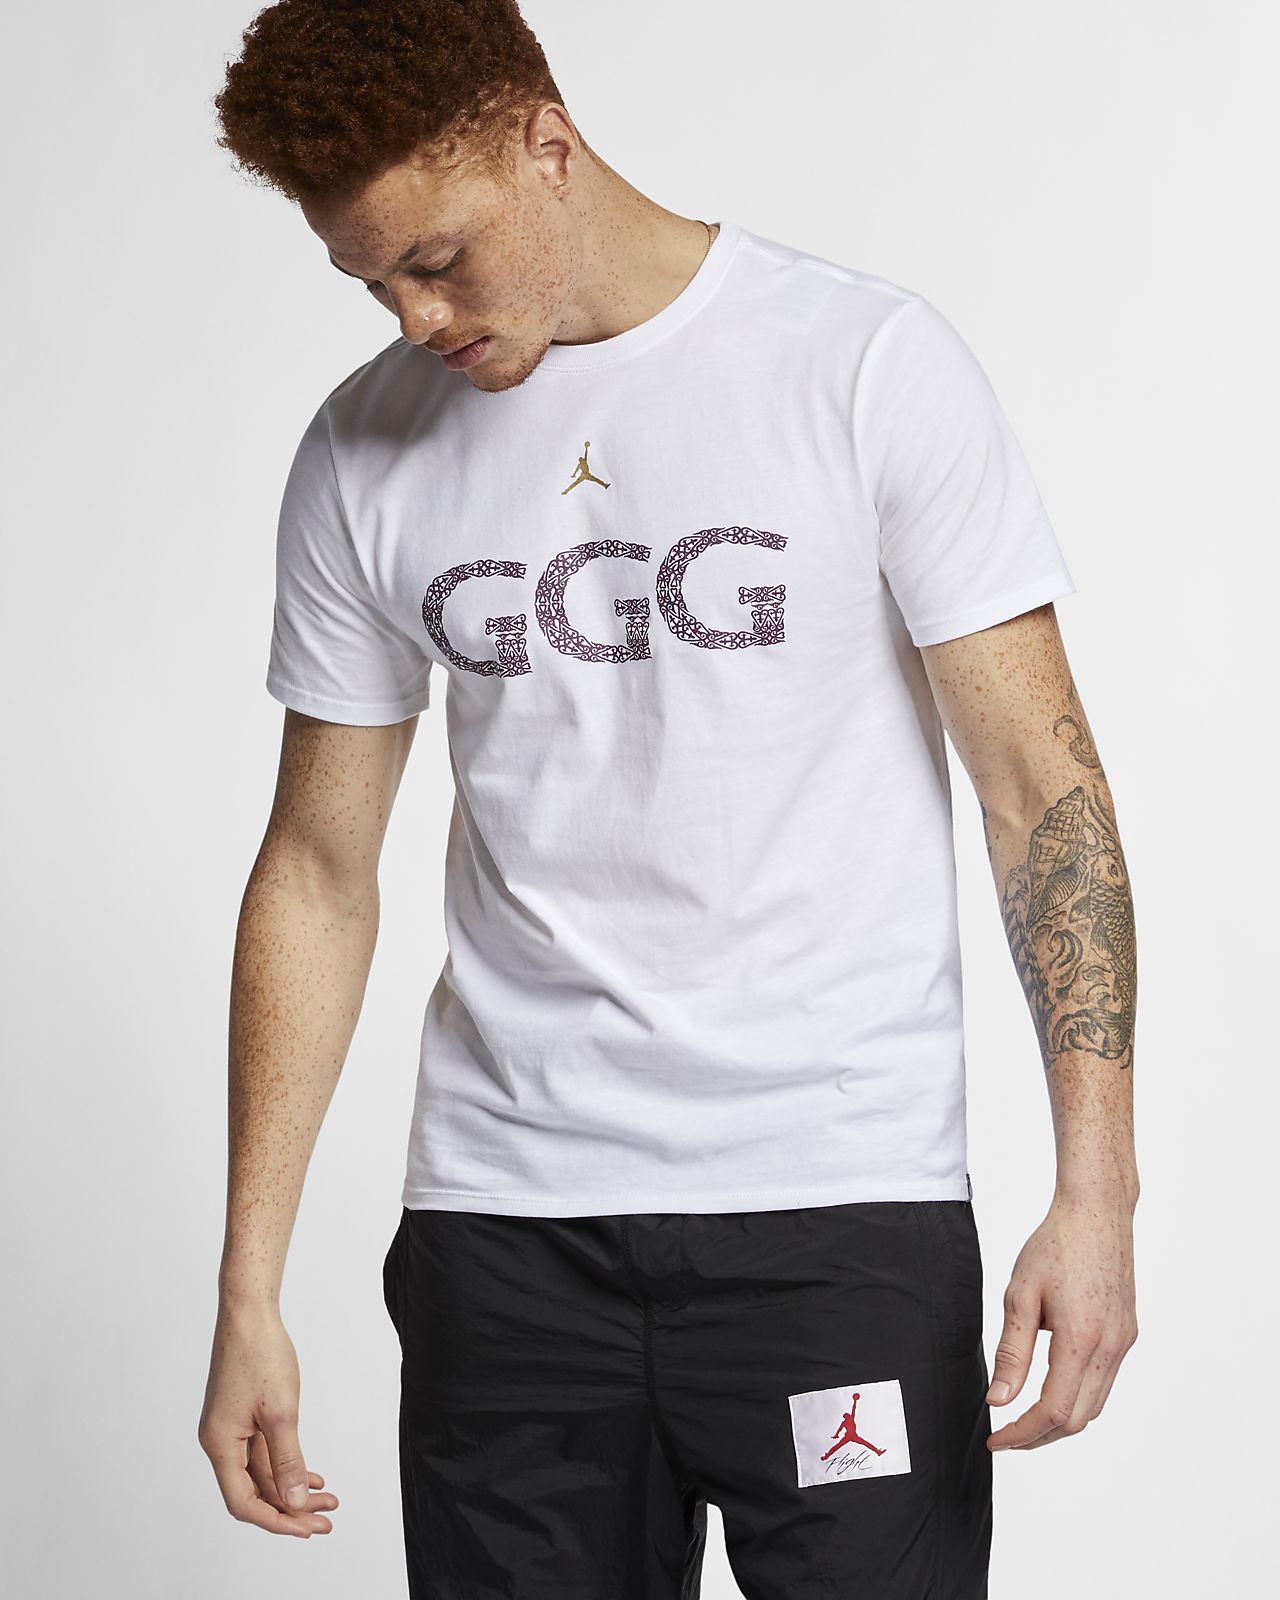 Jordan Sportswear "GGG" Logo Men's T-Shirt